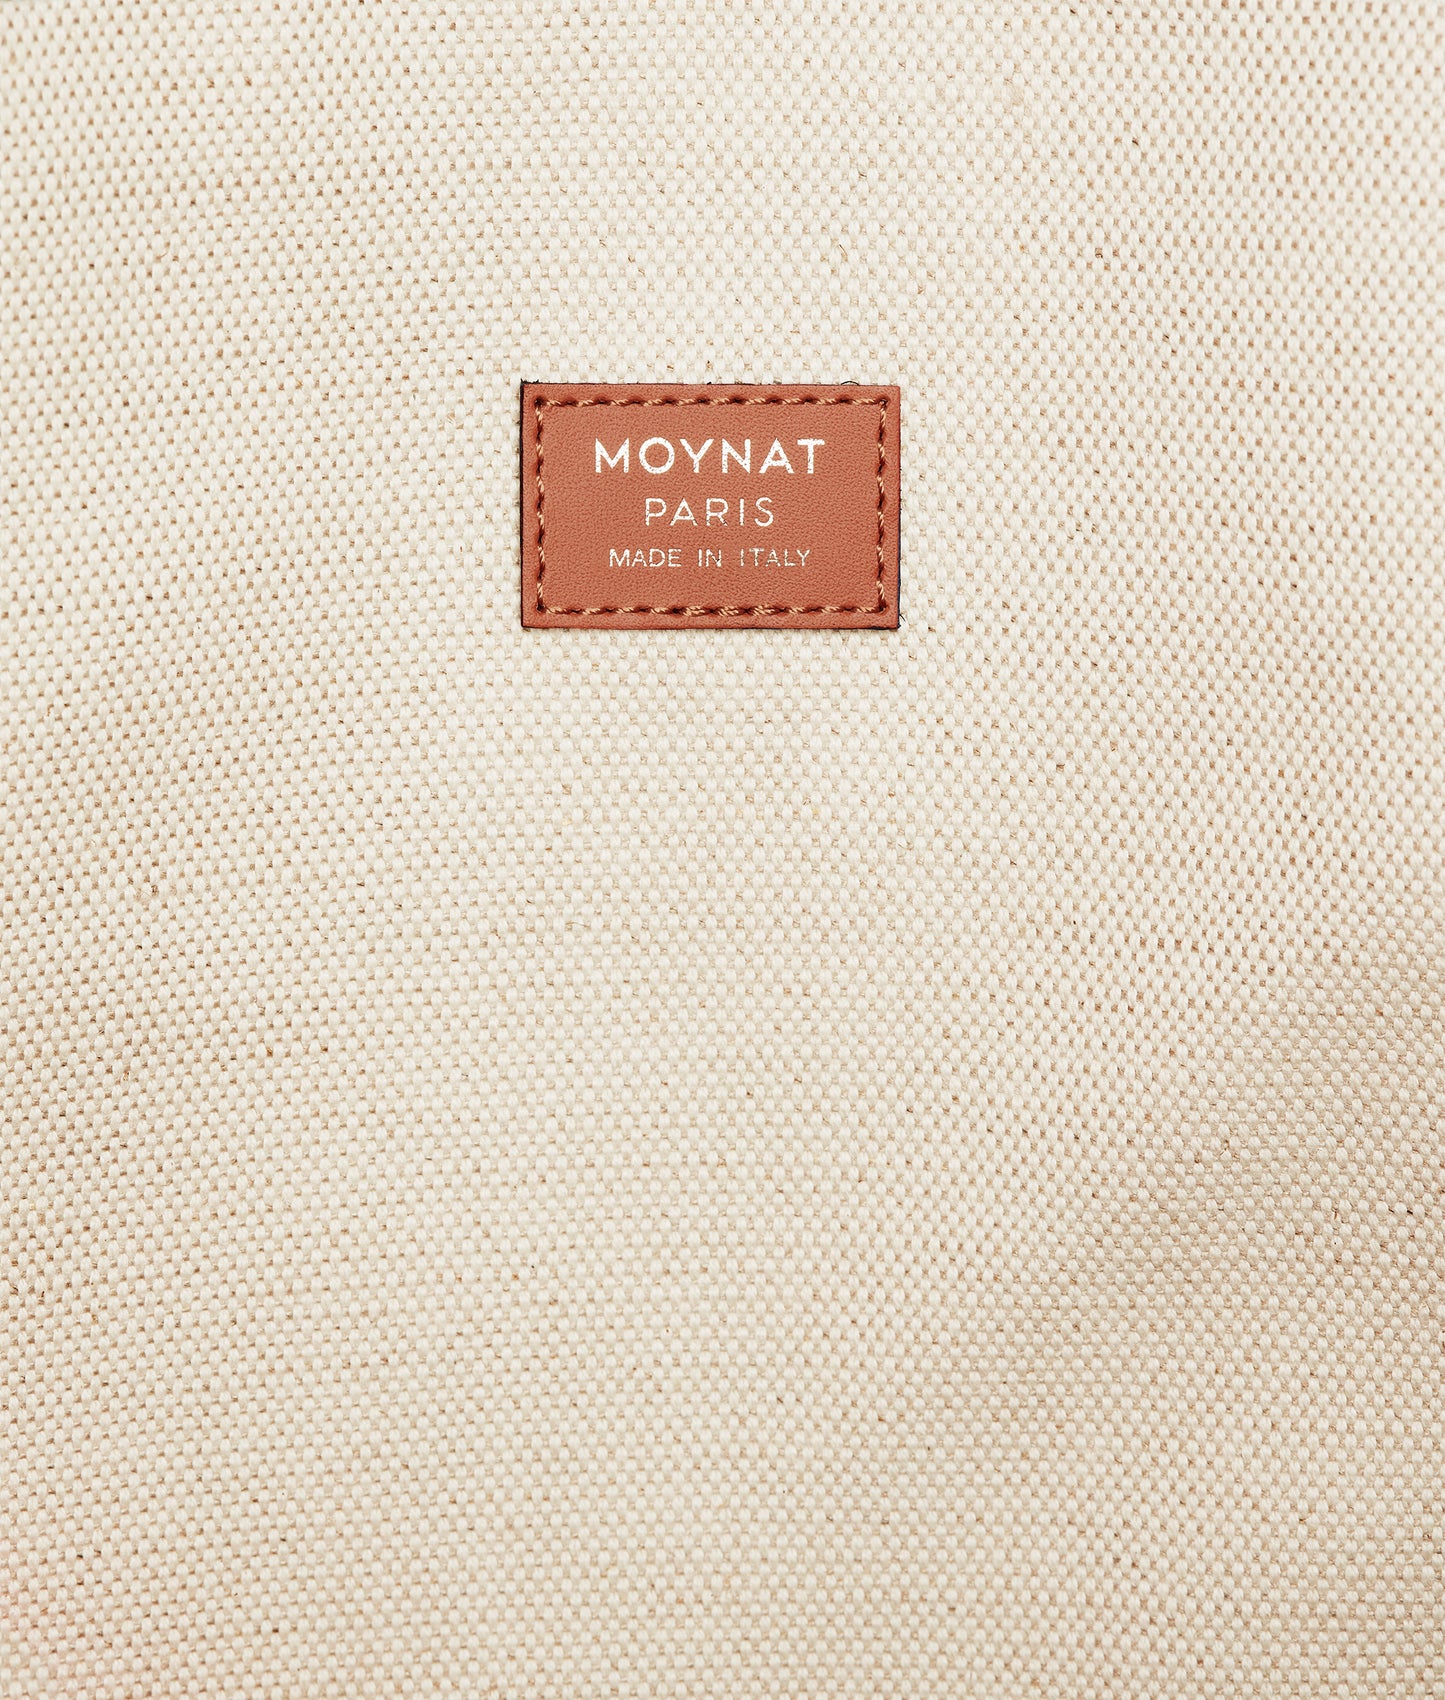 Download Moynat Oh Tote Wallpaper